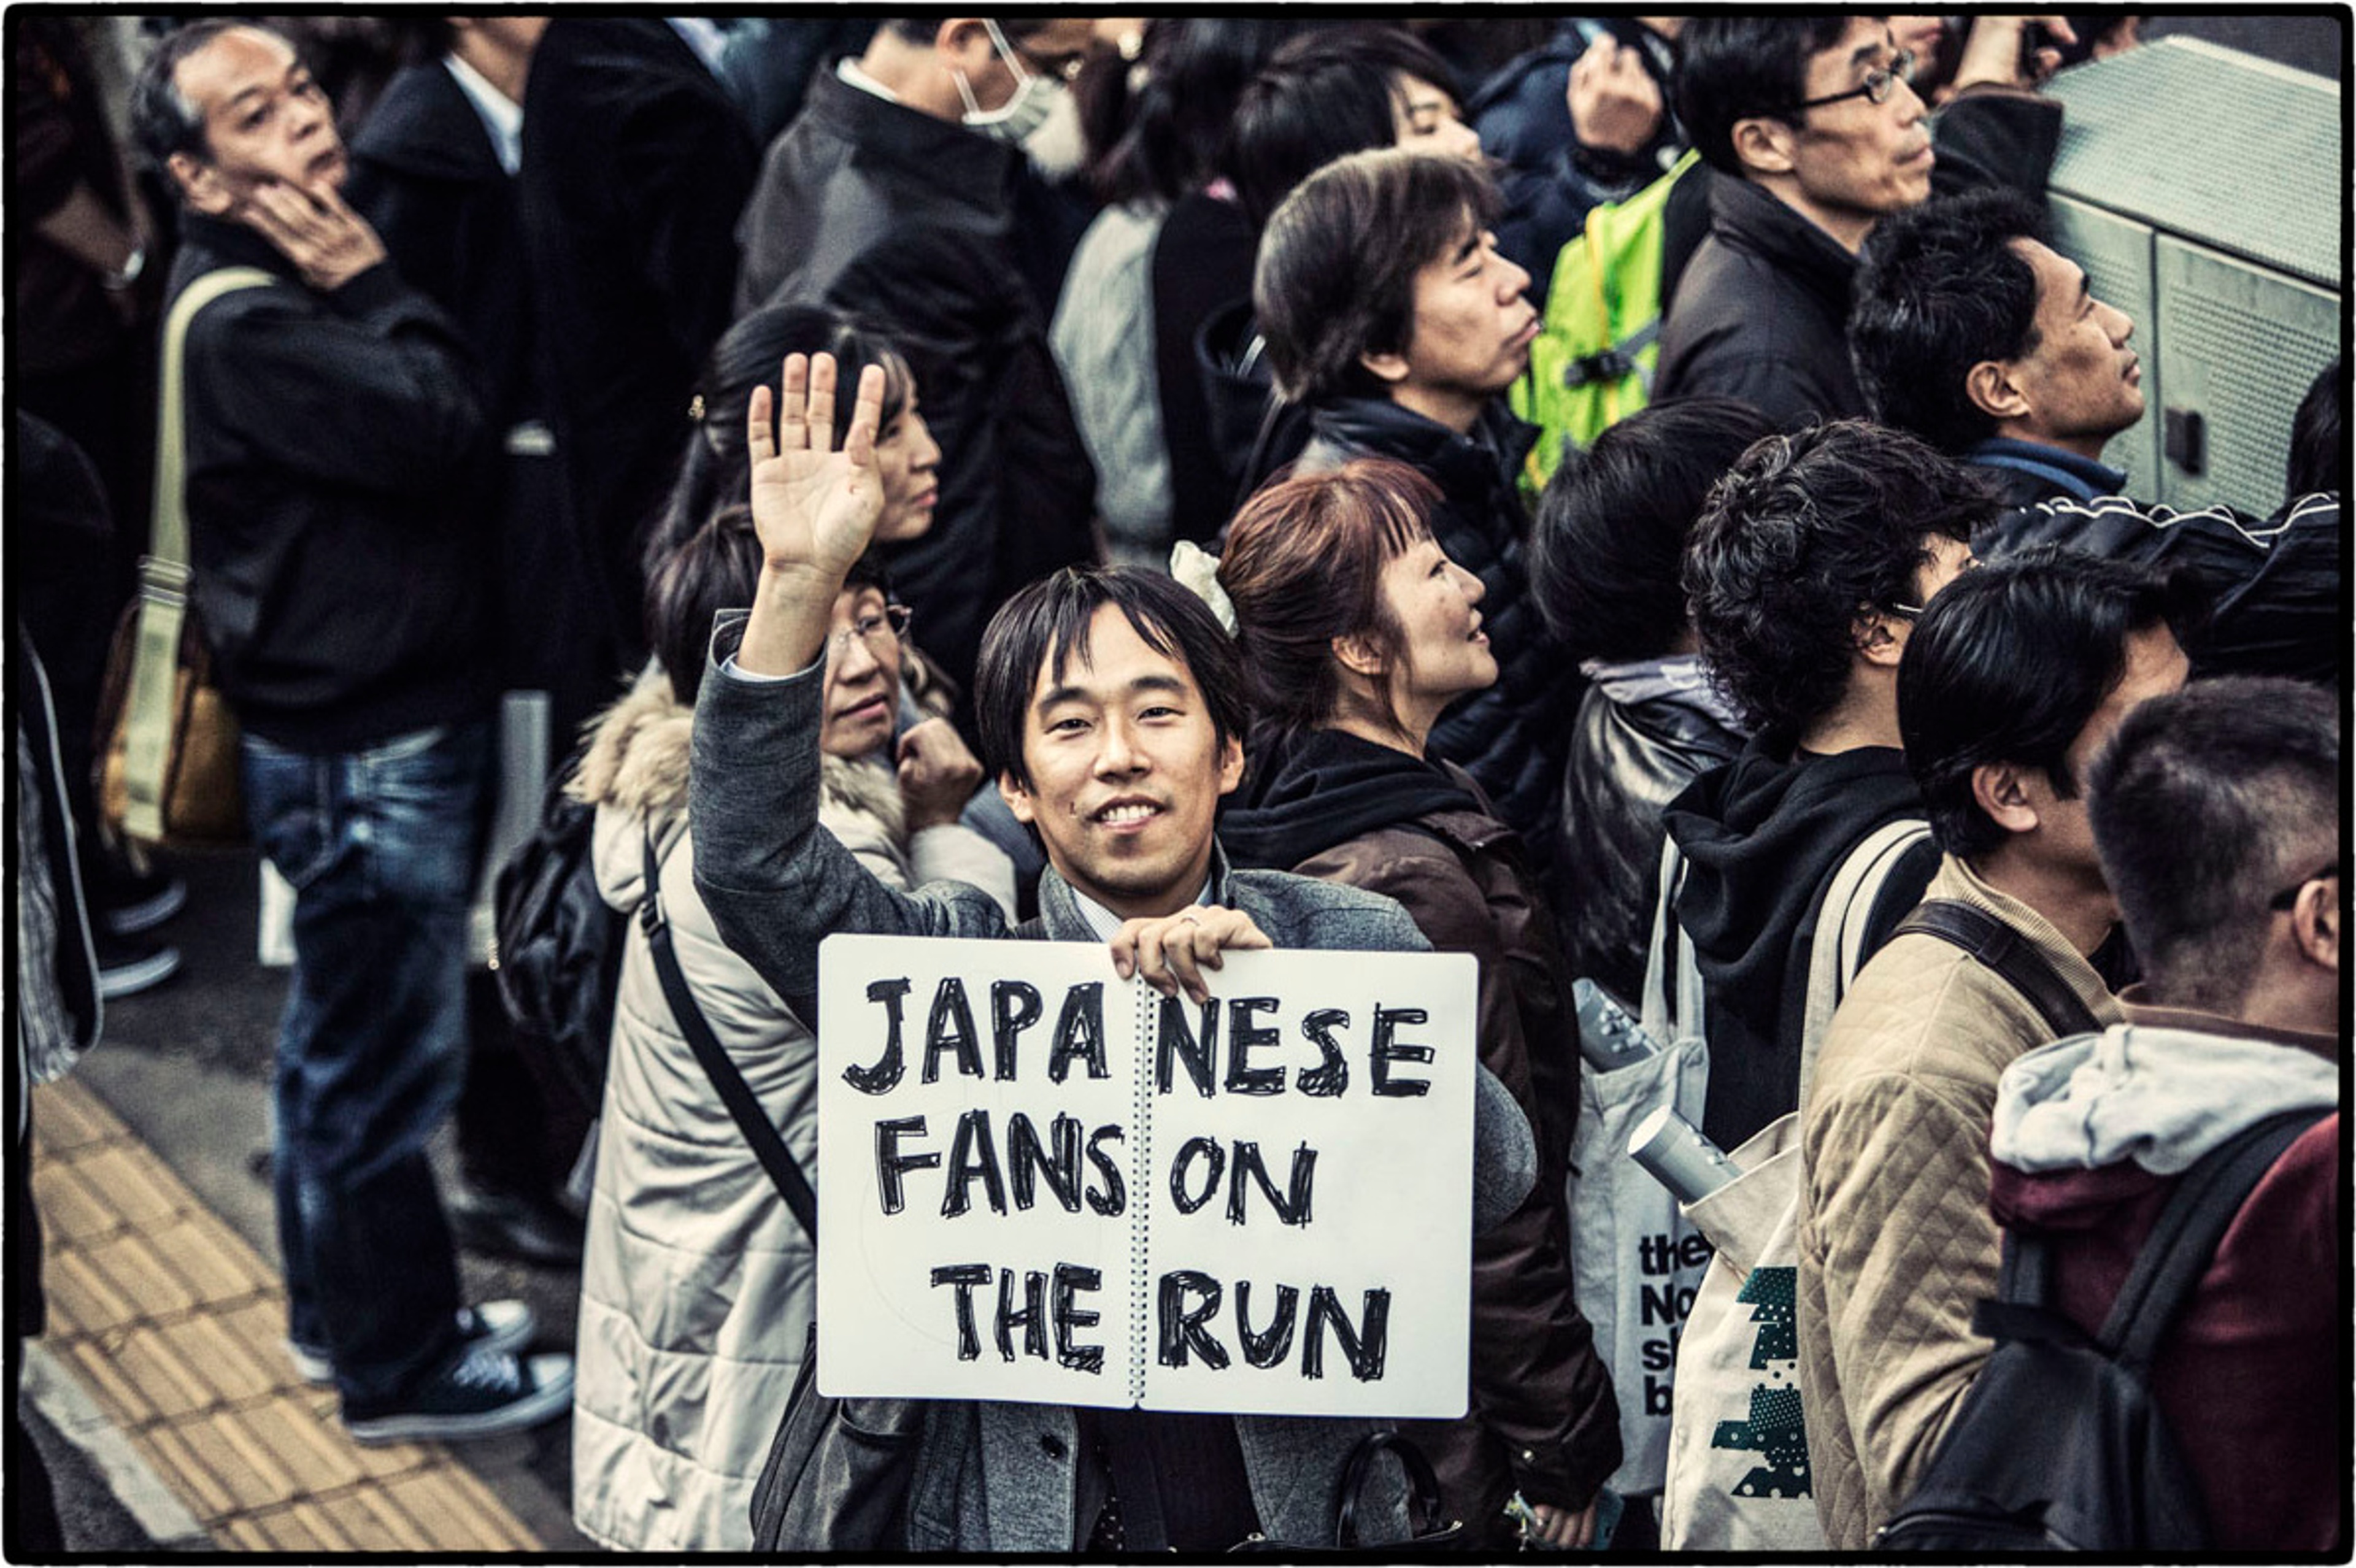 Fans waiting for Paul's arrival, Tokyo, 21st November 2013